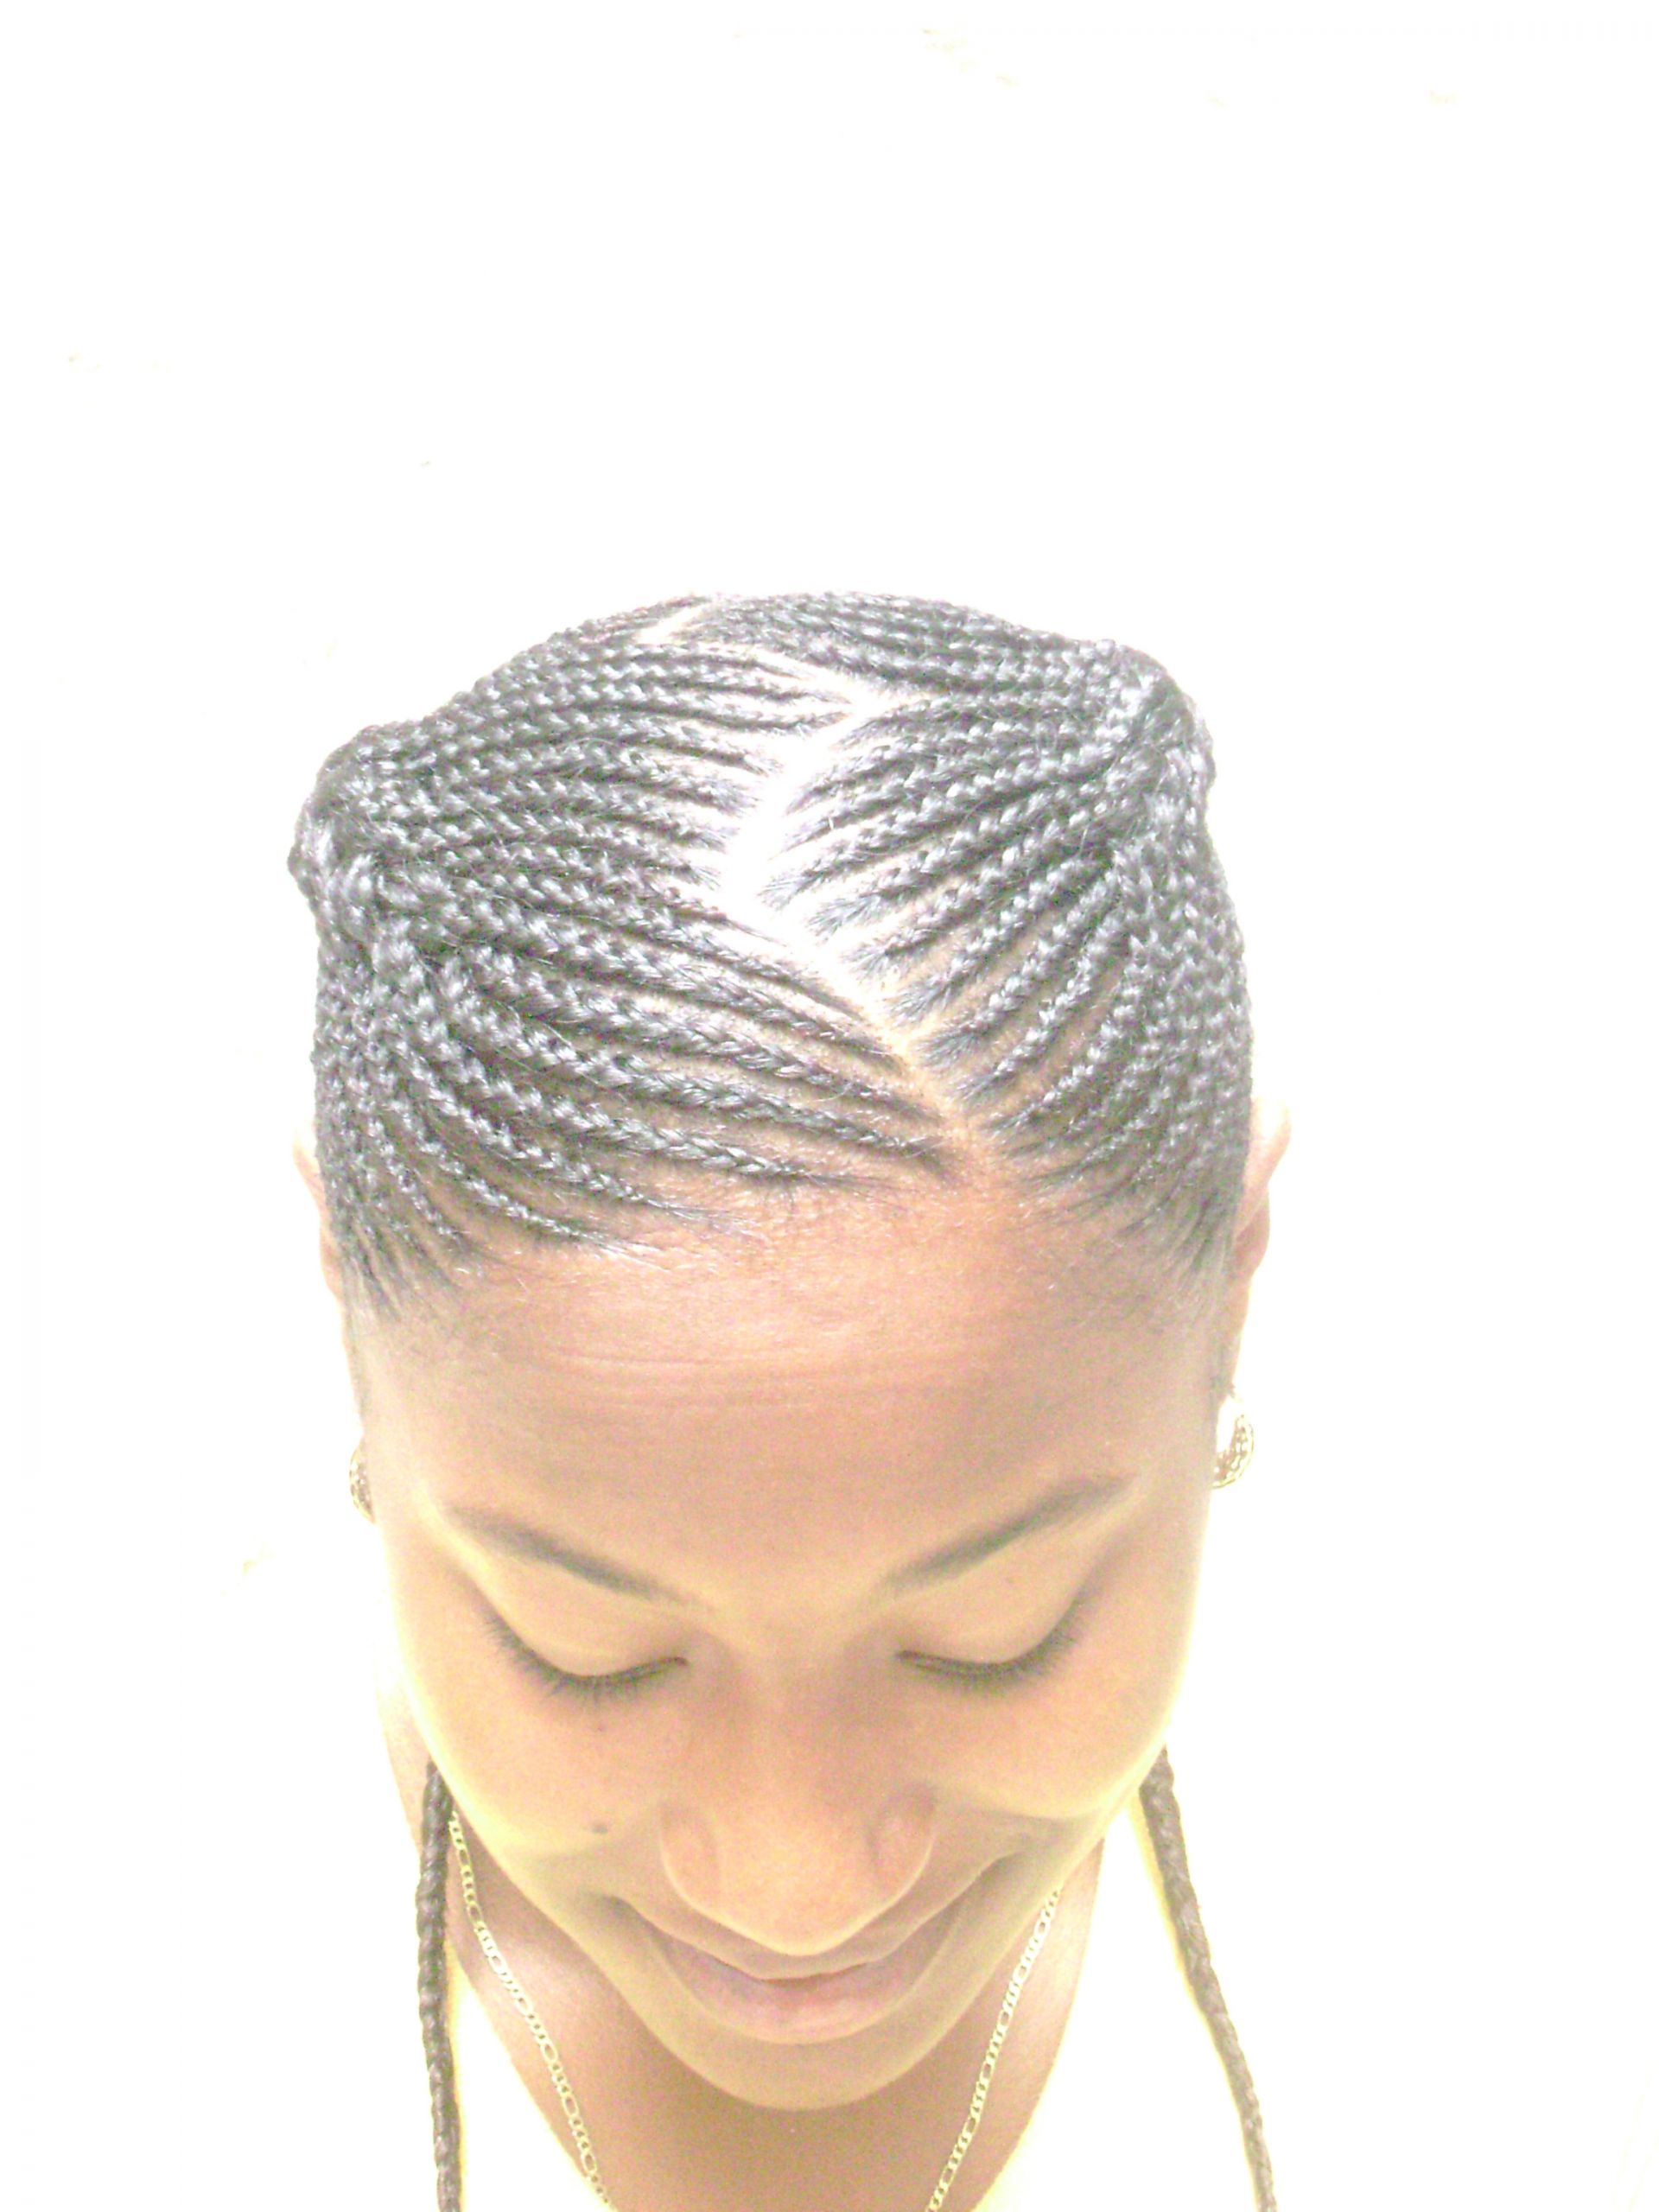 Cornrows Braided Hairstyles
 30 Cornrow Hairstyles Ideas for Black Women MagMent